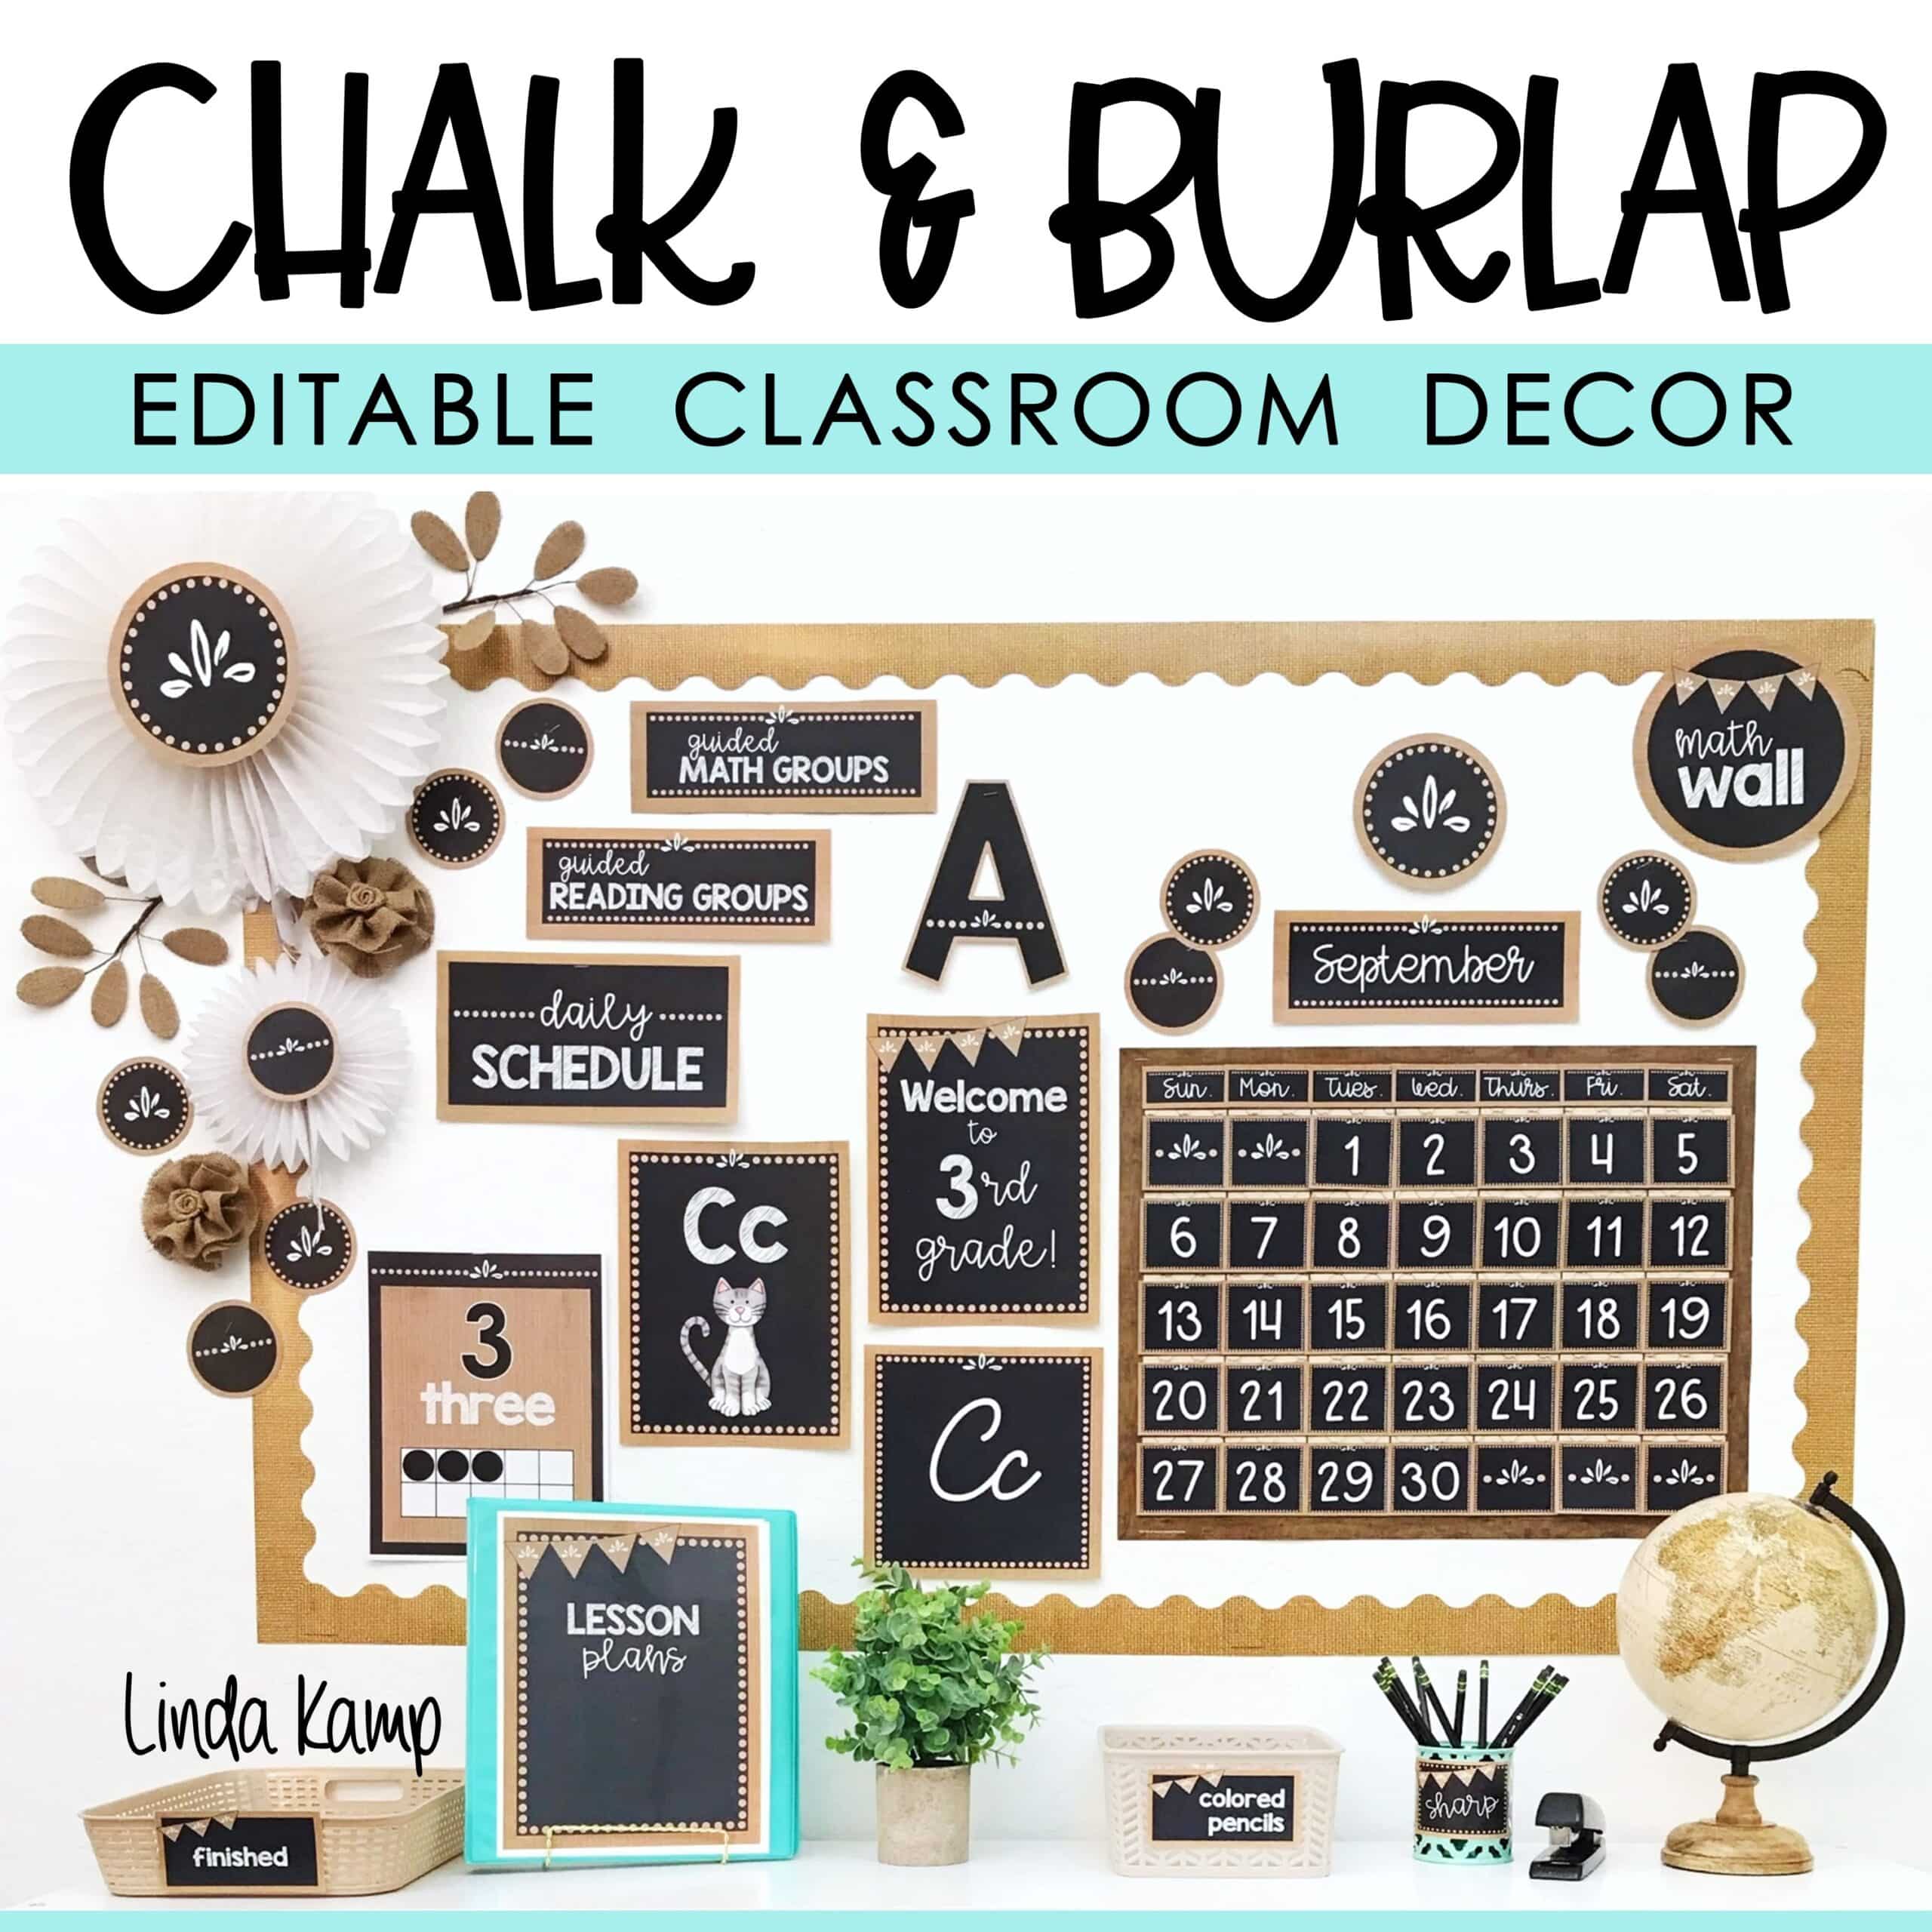 Chalk & Burlap Classroom Decor set